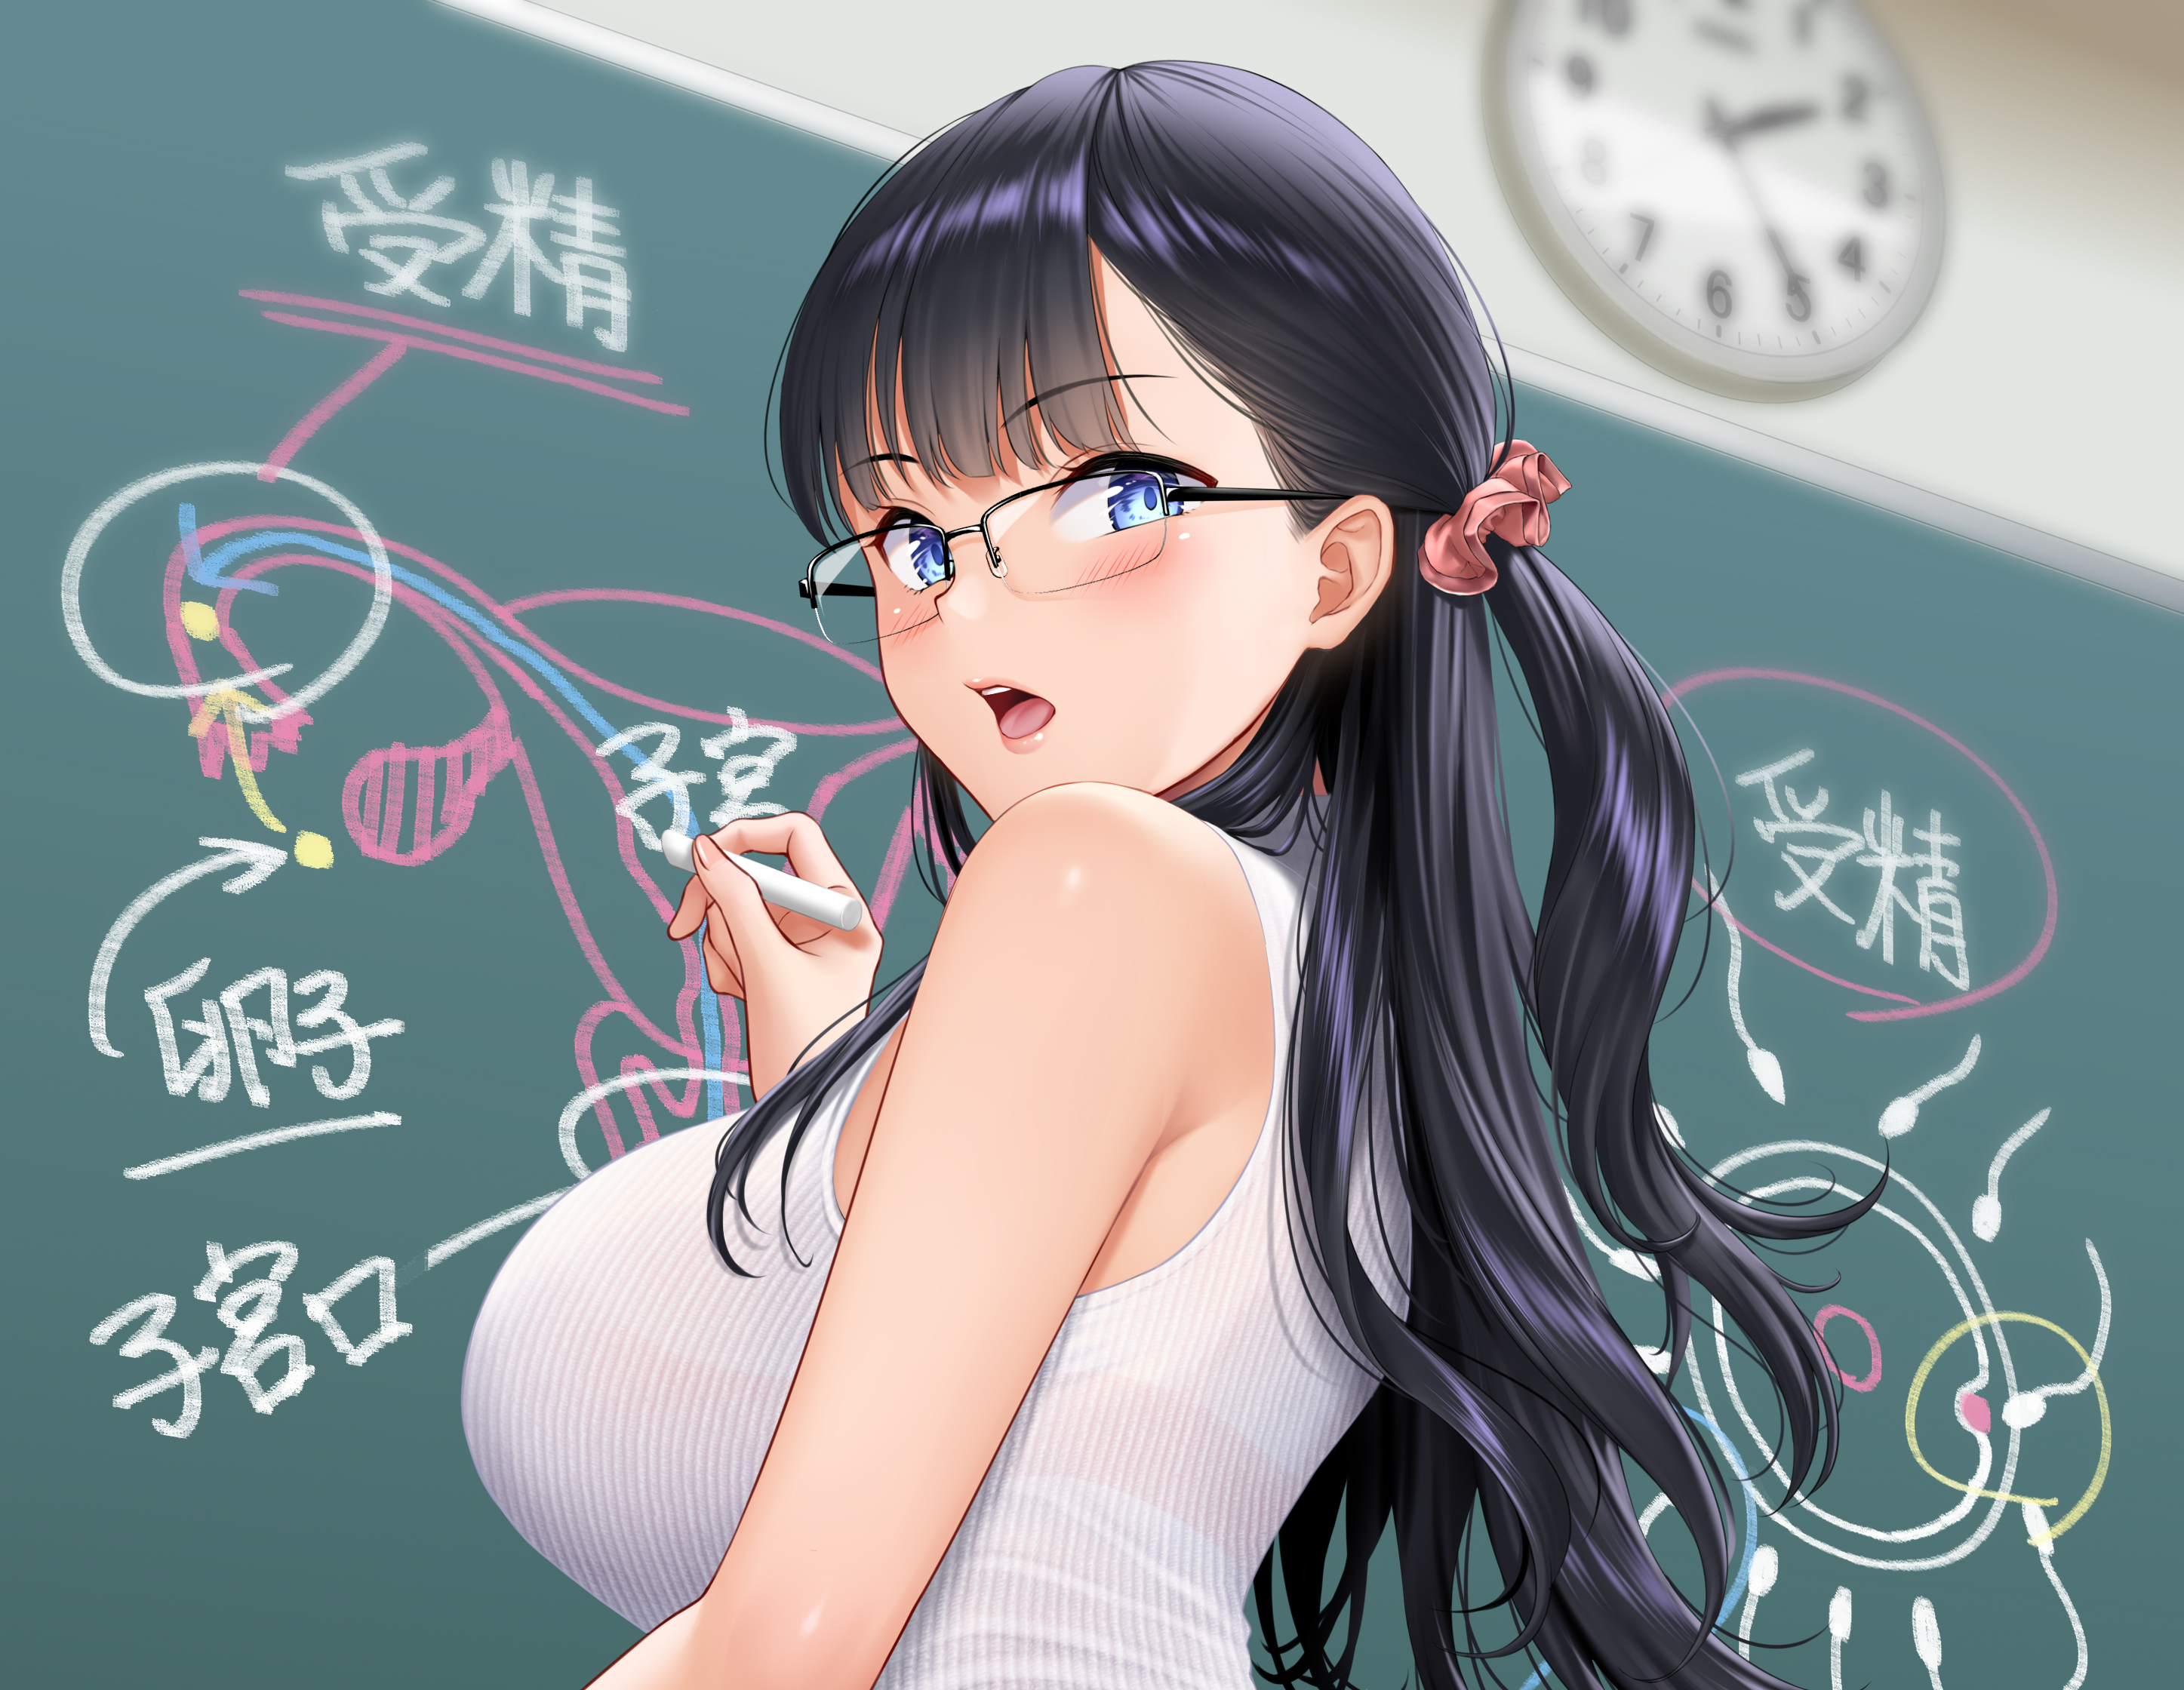 Anime Girls Re Shimashima Shimashima08123 Tank Top Dark Hair Blue Eyes Glasses Teachers 2894x2240